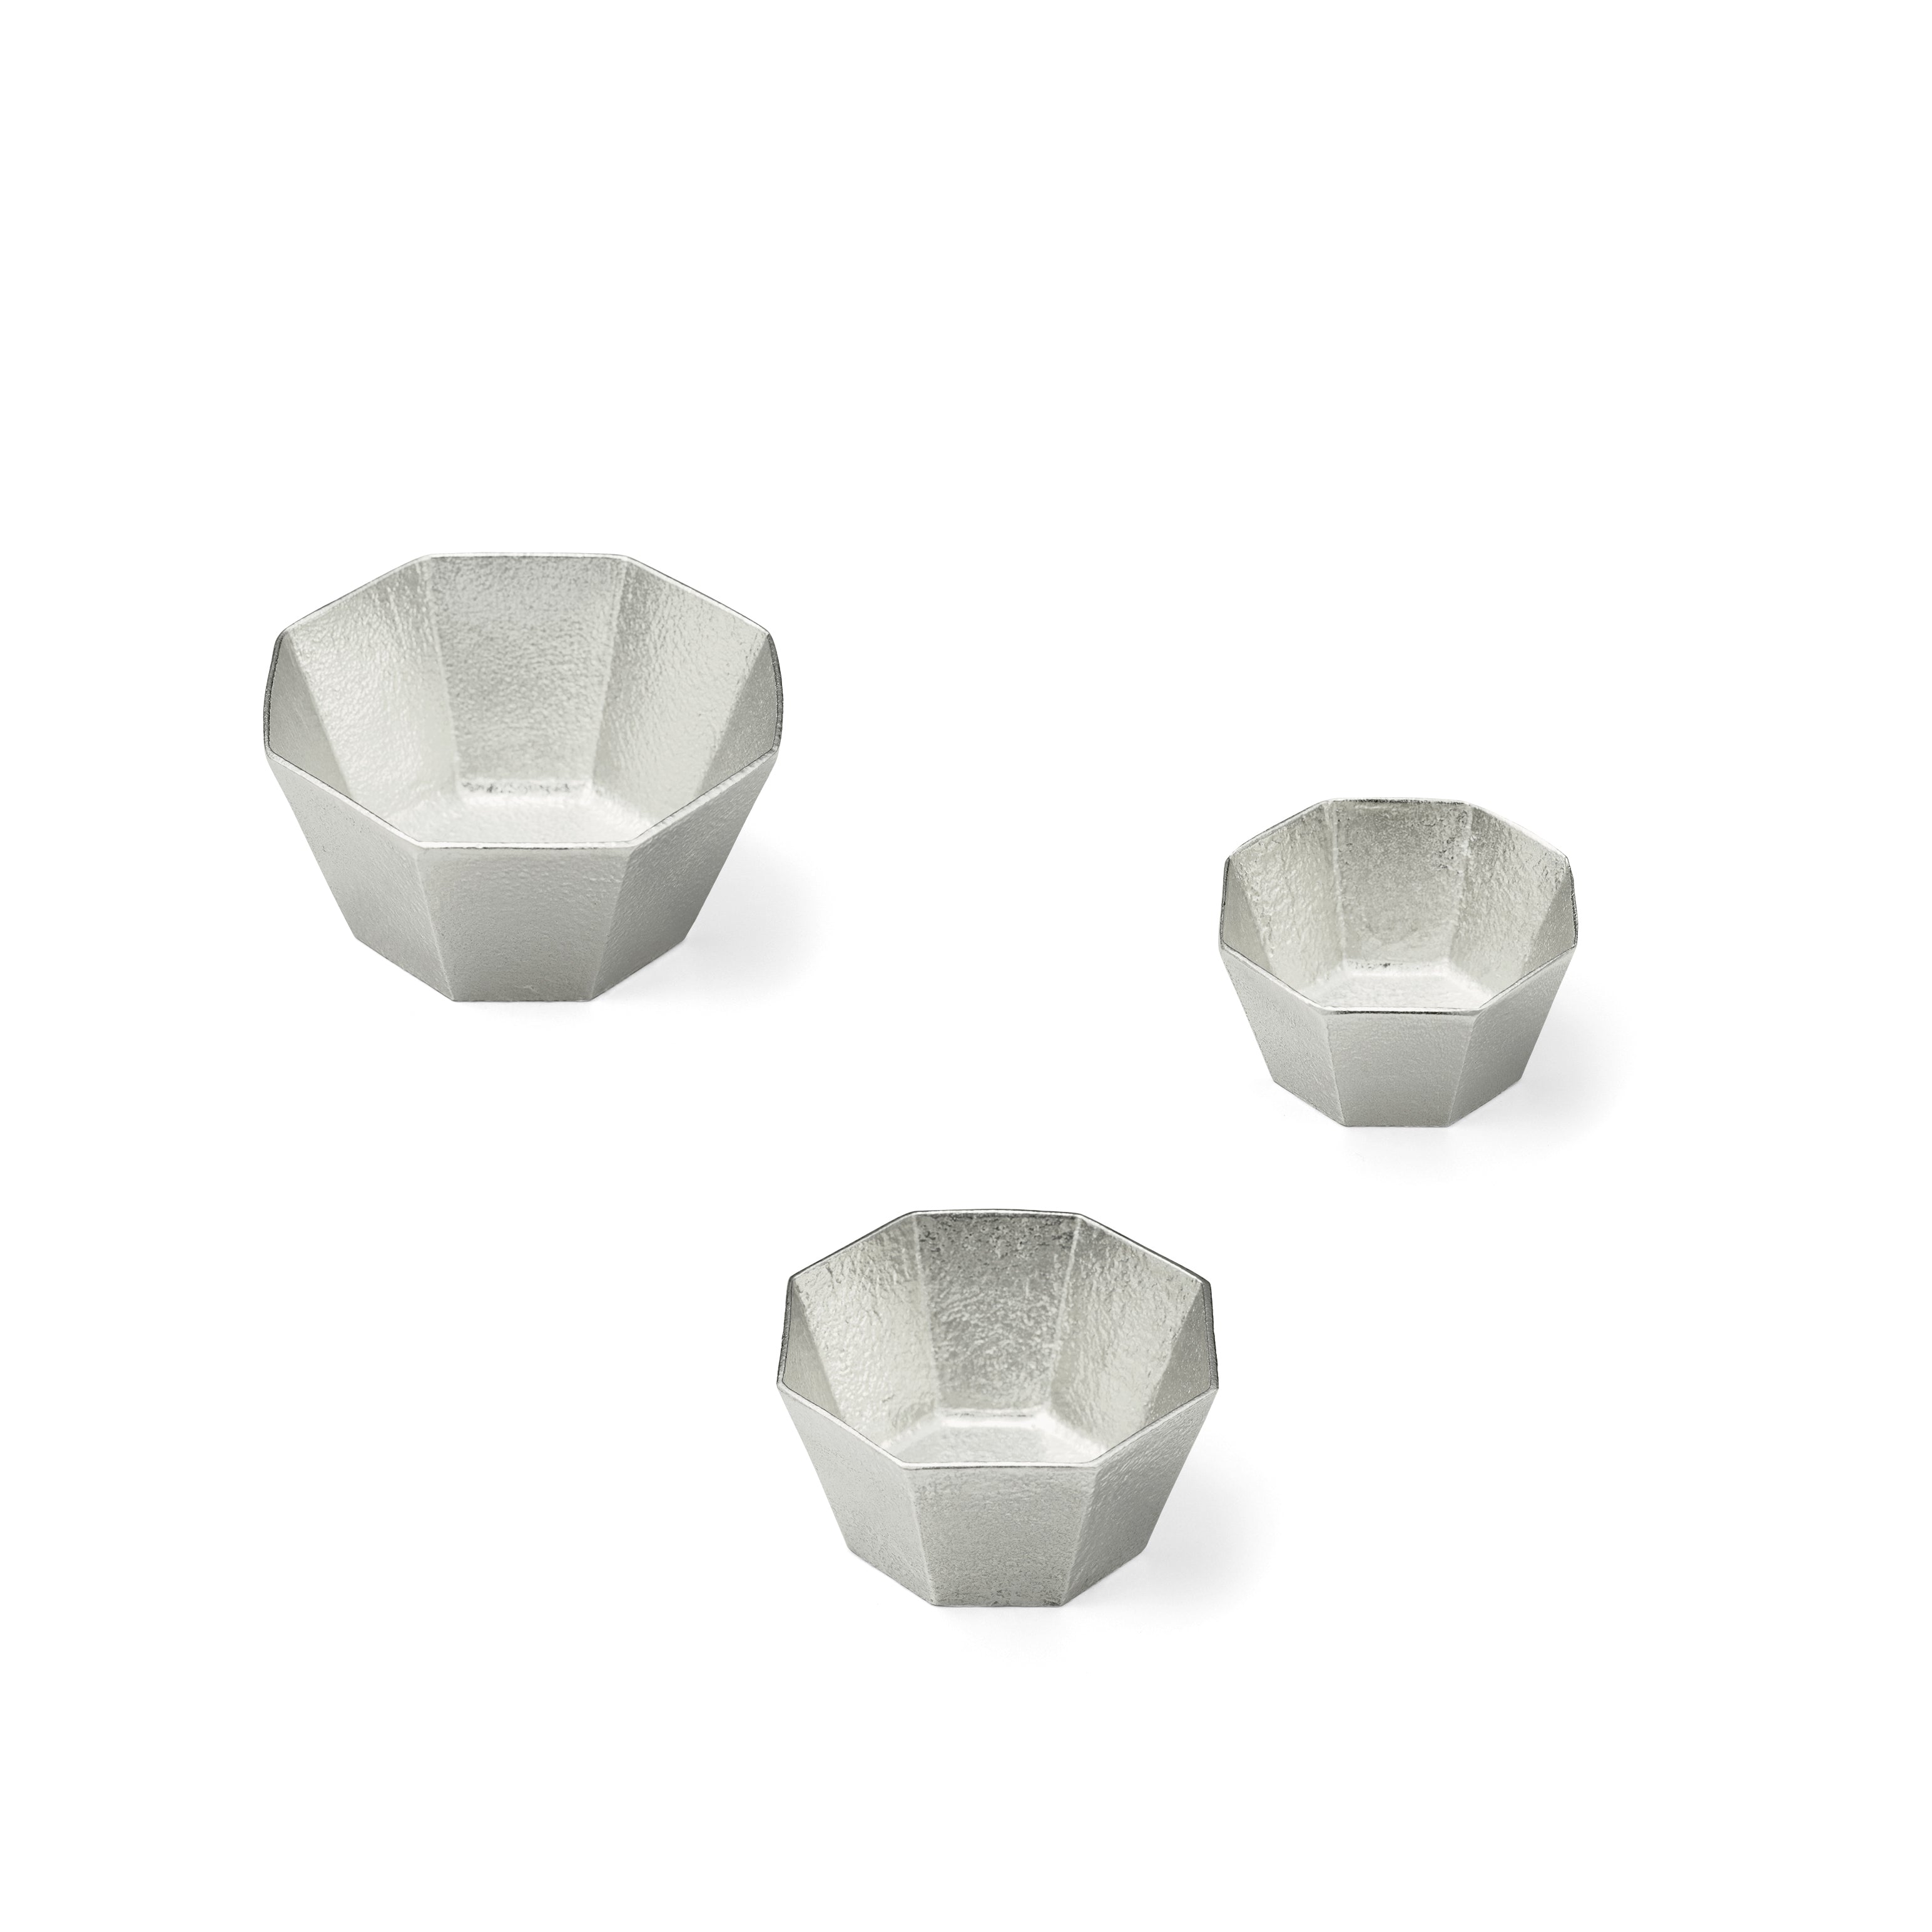 Japanese Kuzushi - Ori Tin Bowl in Small